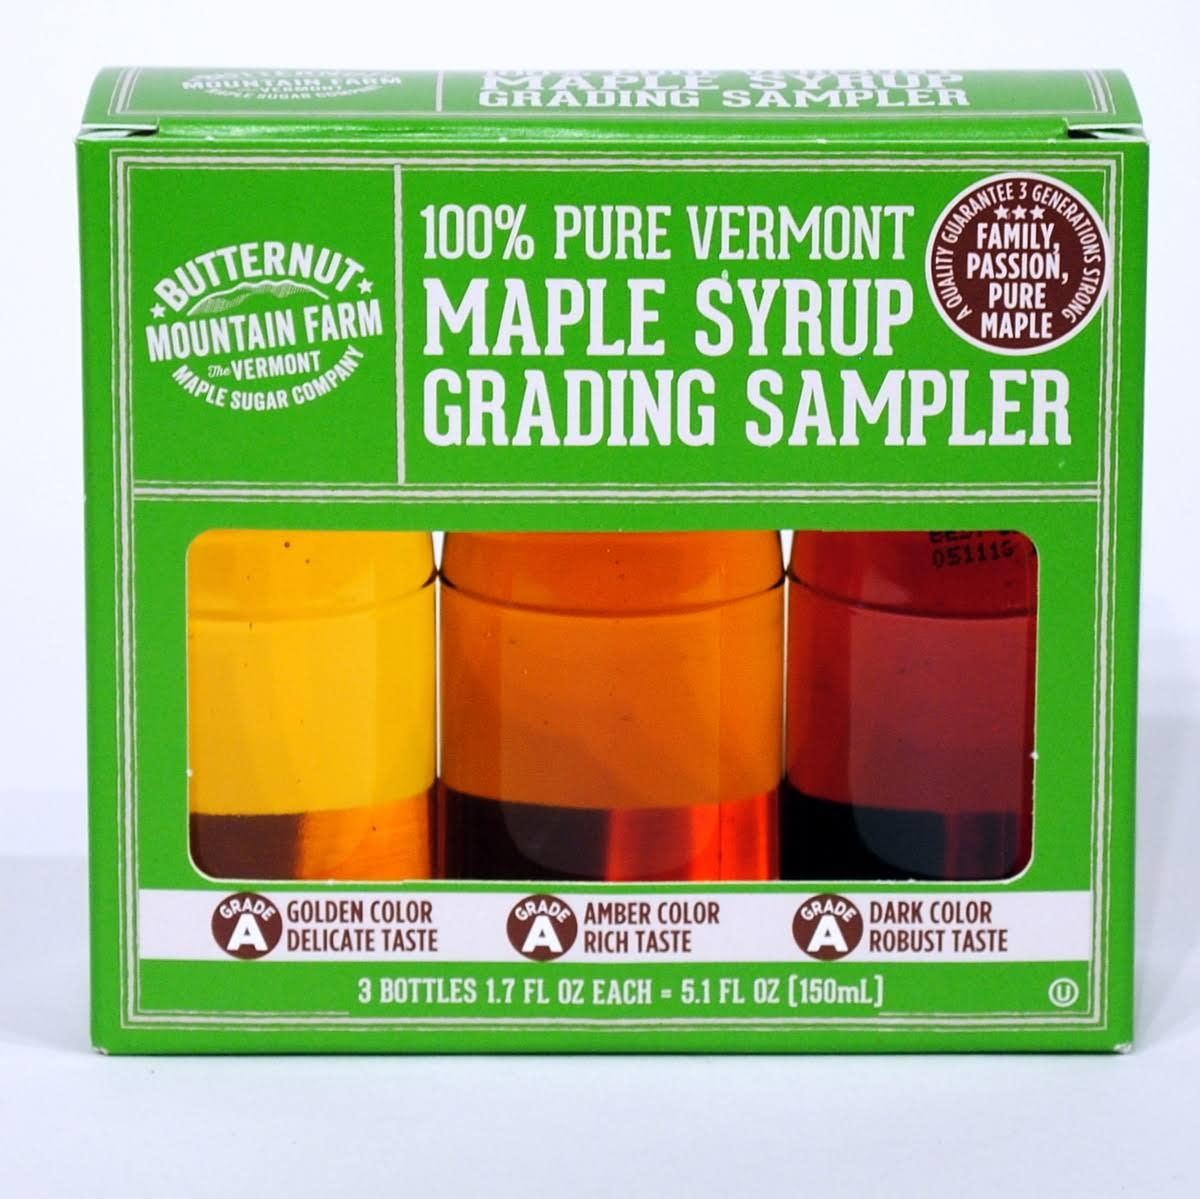 Butternut Mountain Farm 100% Pure Vermont Maple Syrup Grading Sampler - 5.1 Fl Oz